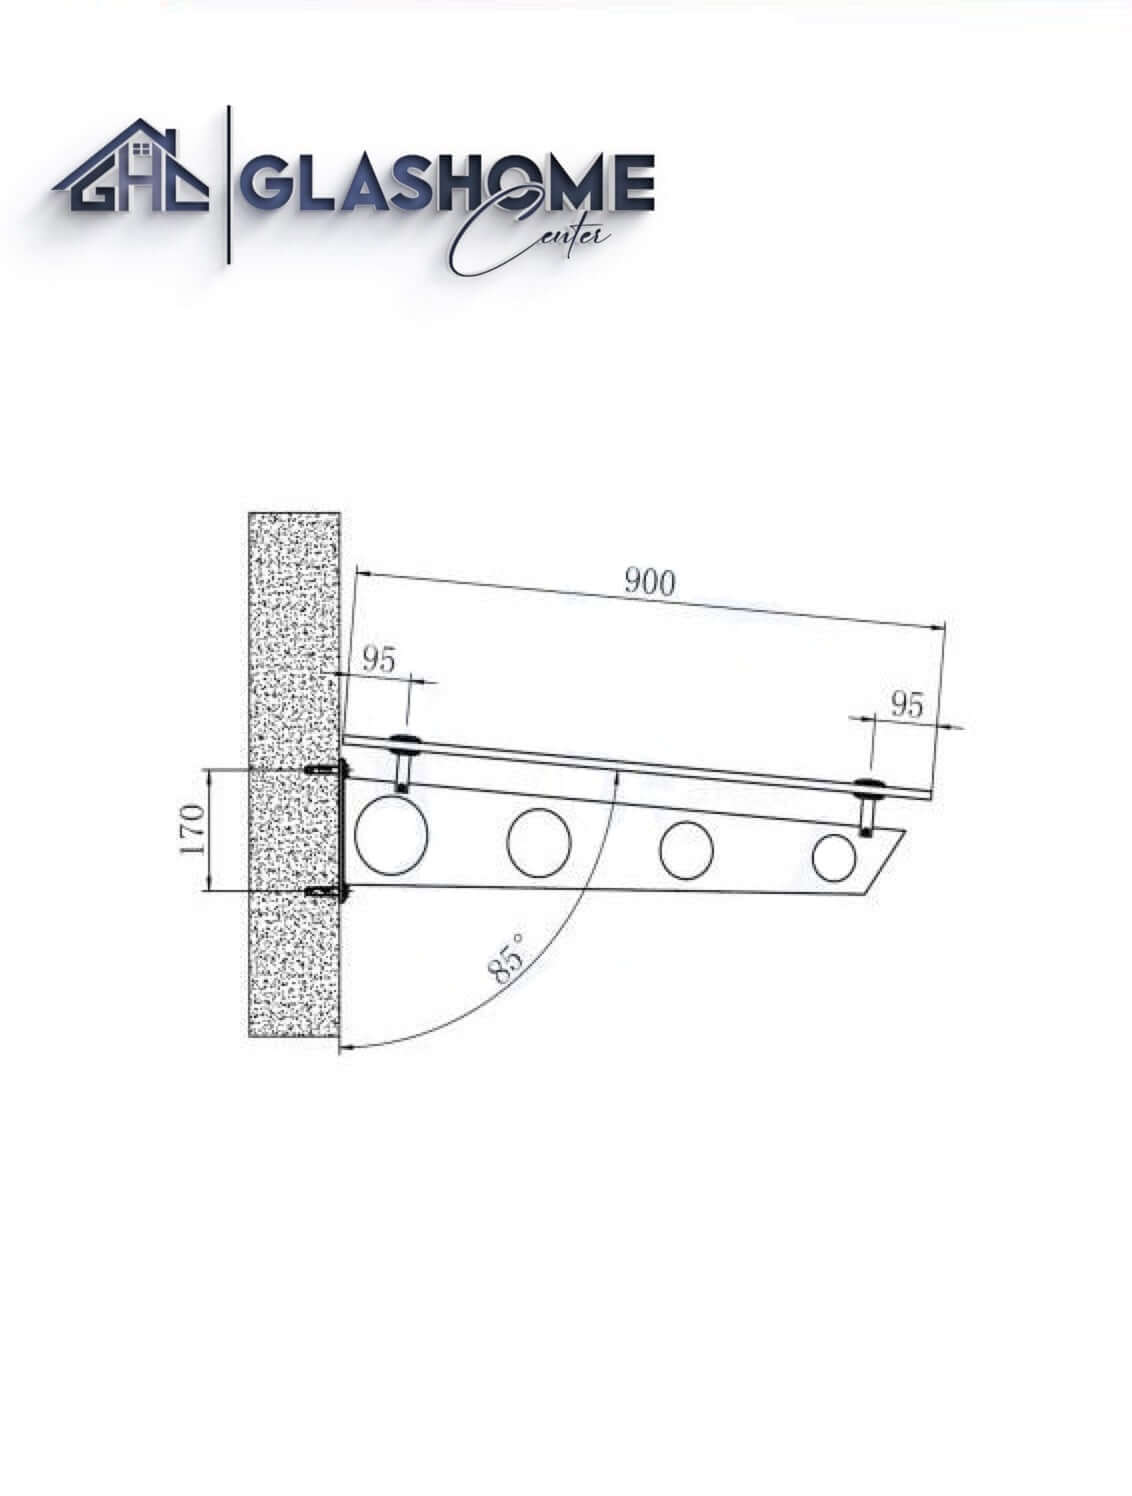 GlasHomeCenter - glass canopy - Clear glass - 190x90cm - 13.1mm VSG - incl. 2 Edelstahlhalterungen Variant "Stockholm"